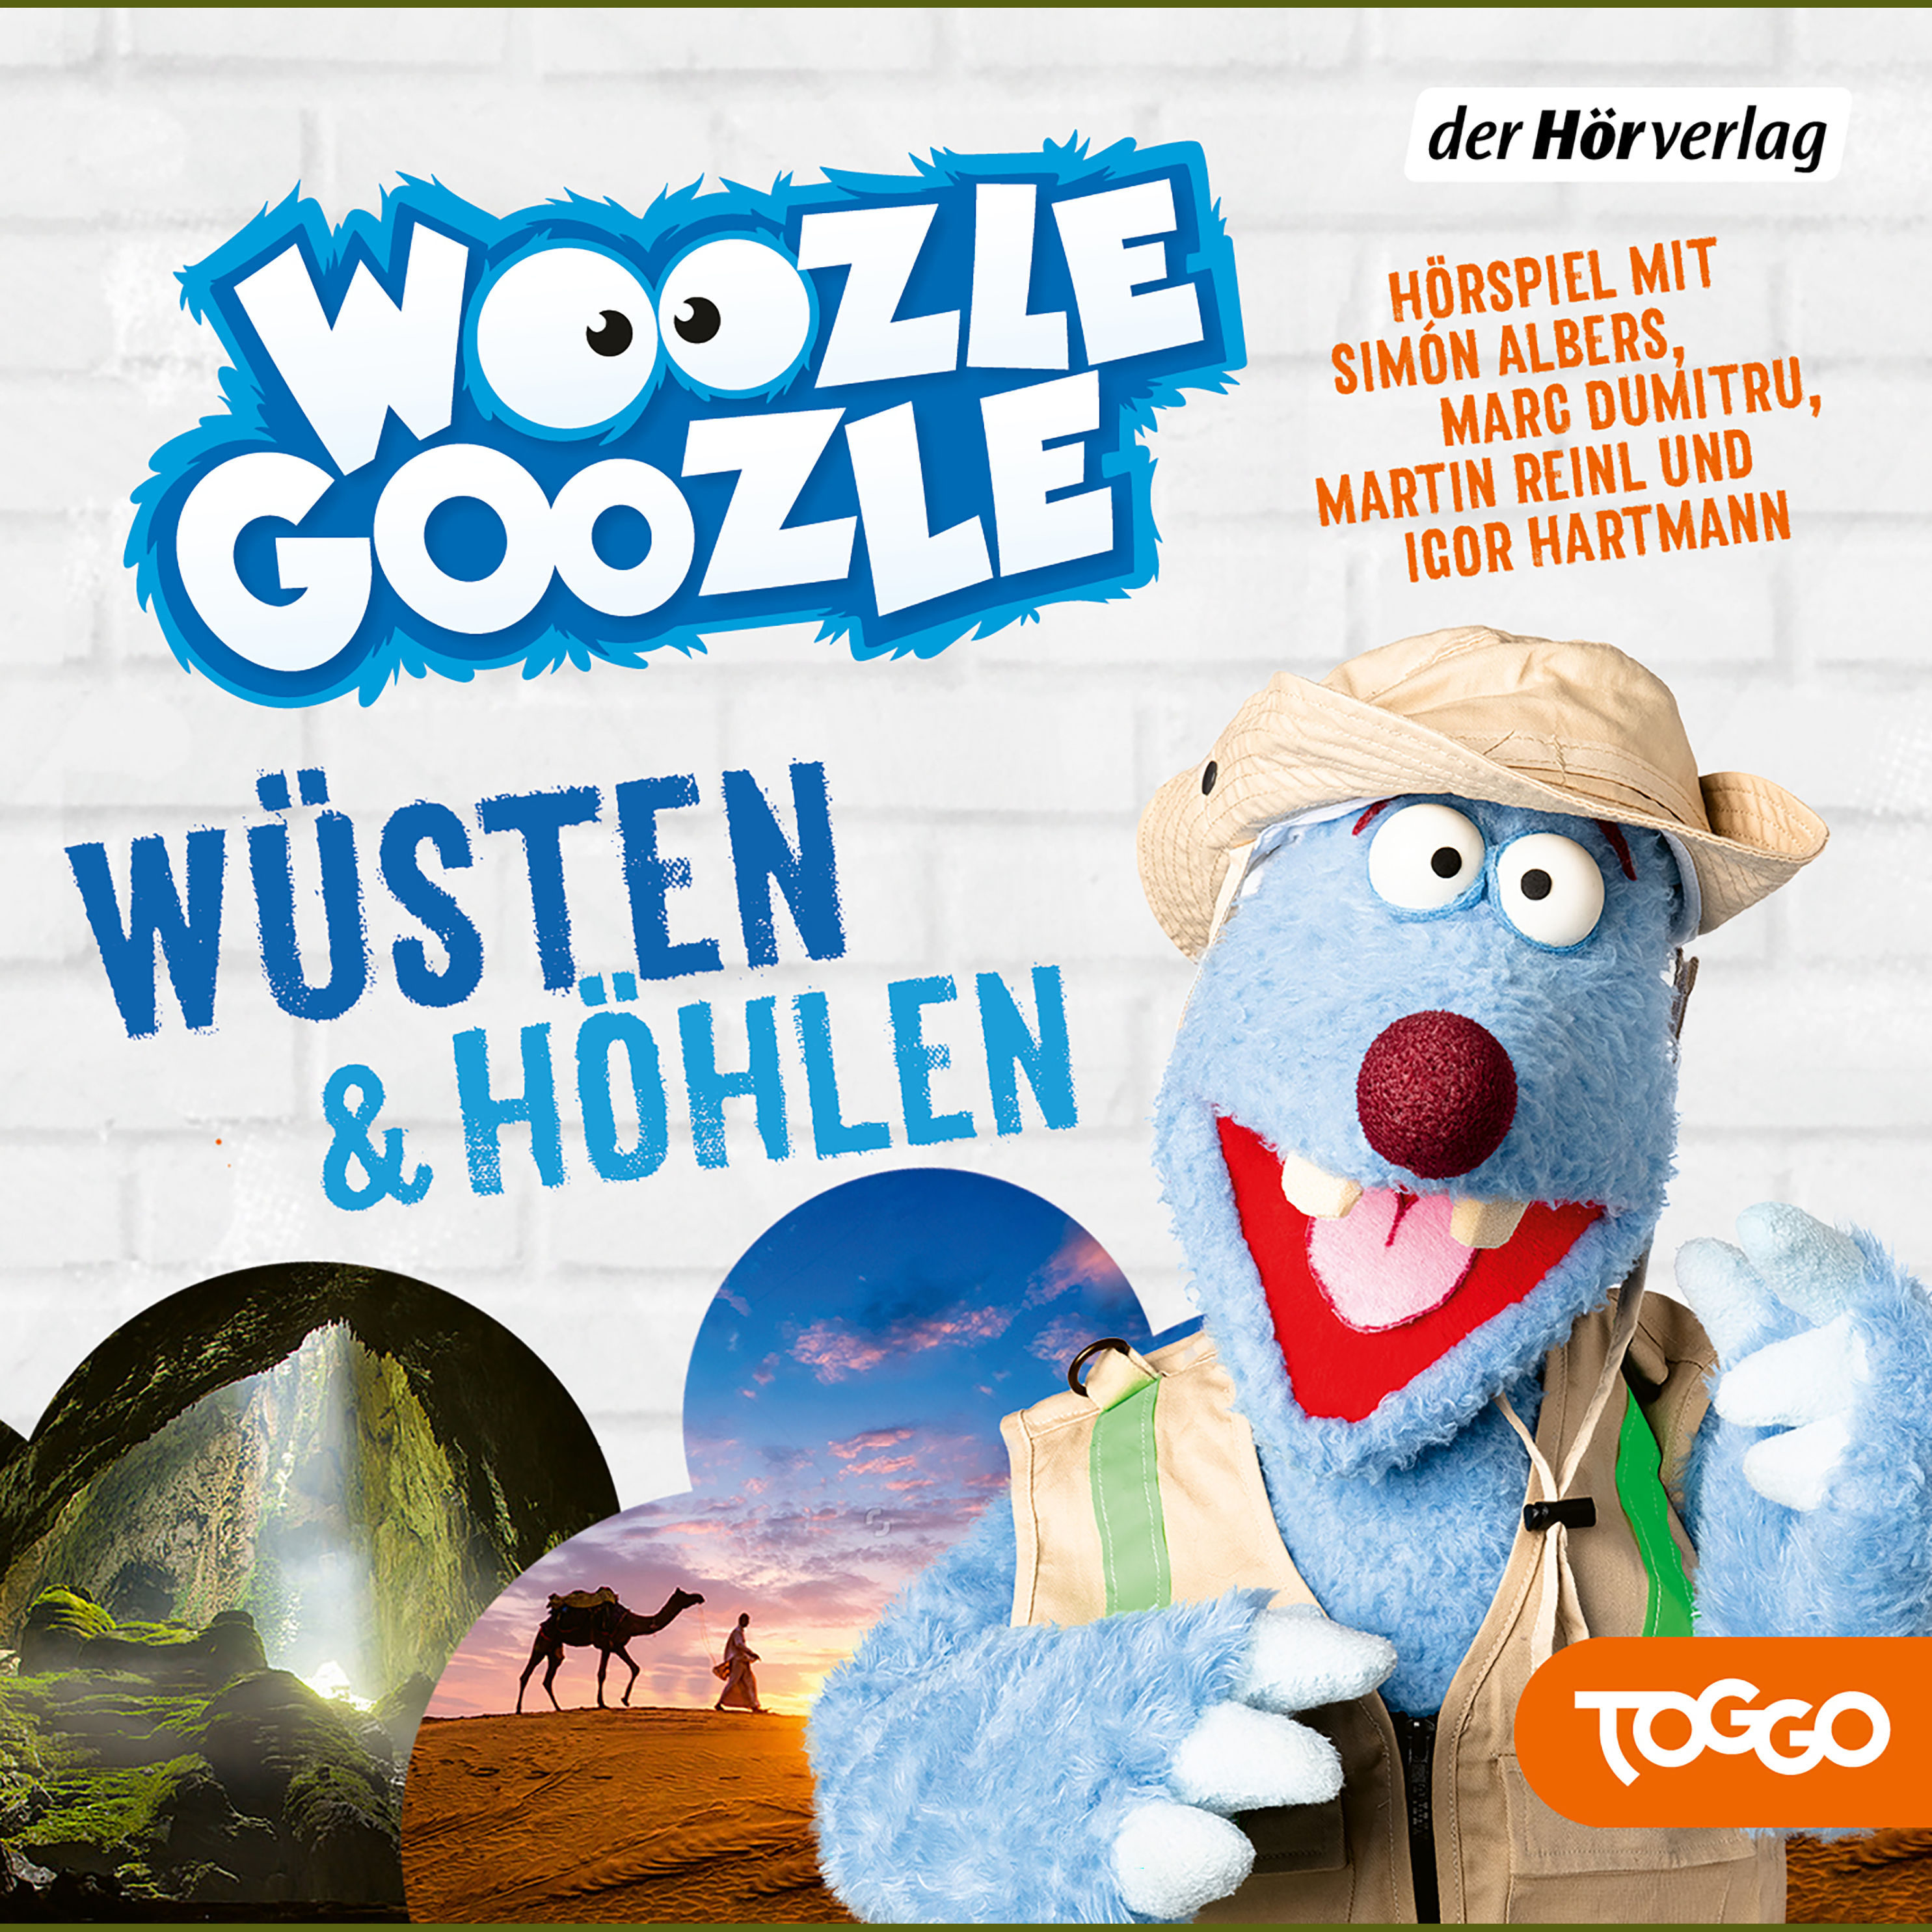 Die Woozle-Goozle-Hörspiele - 3 - Woozle Goozle - Wüsten & Höhlen Hörbuch  Download